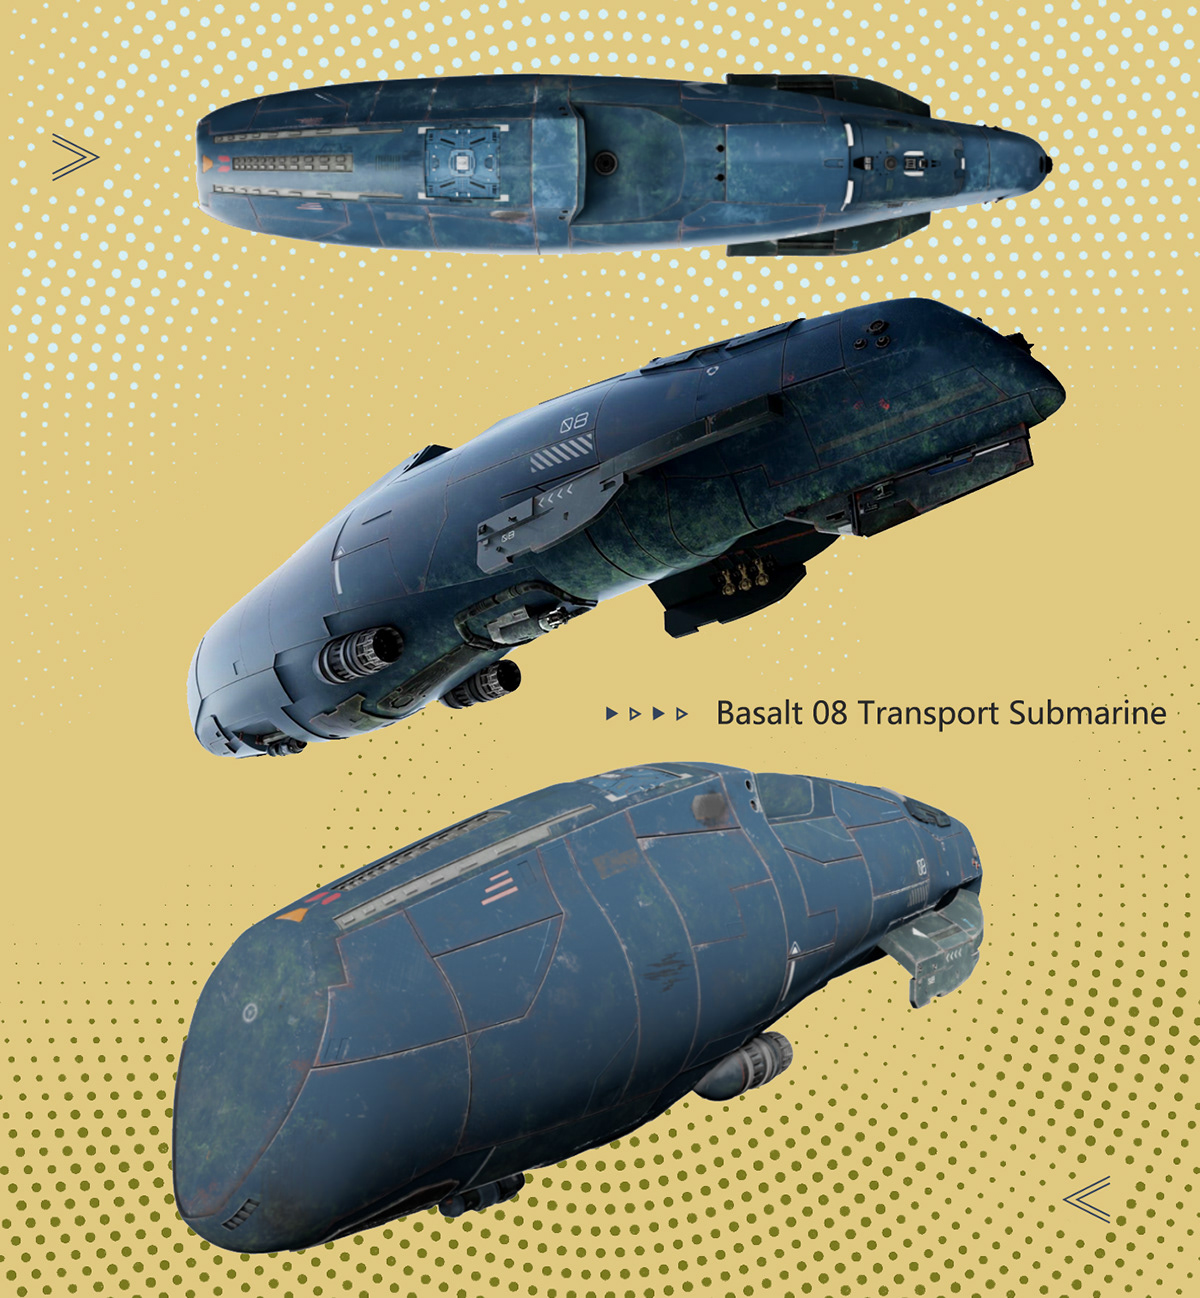 entertainment design mecha design robot design aircraft design concept designs submarine design Vehicle Design